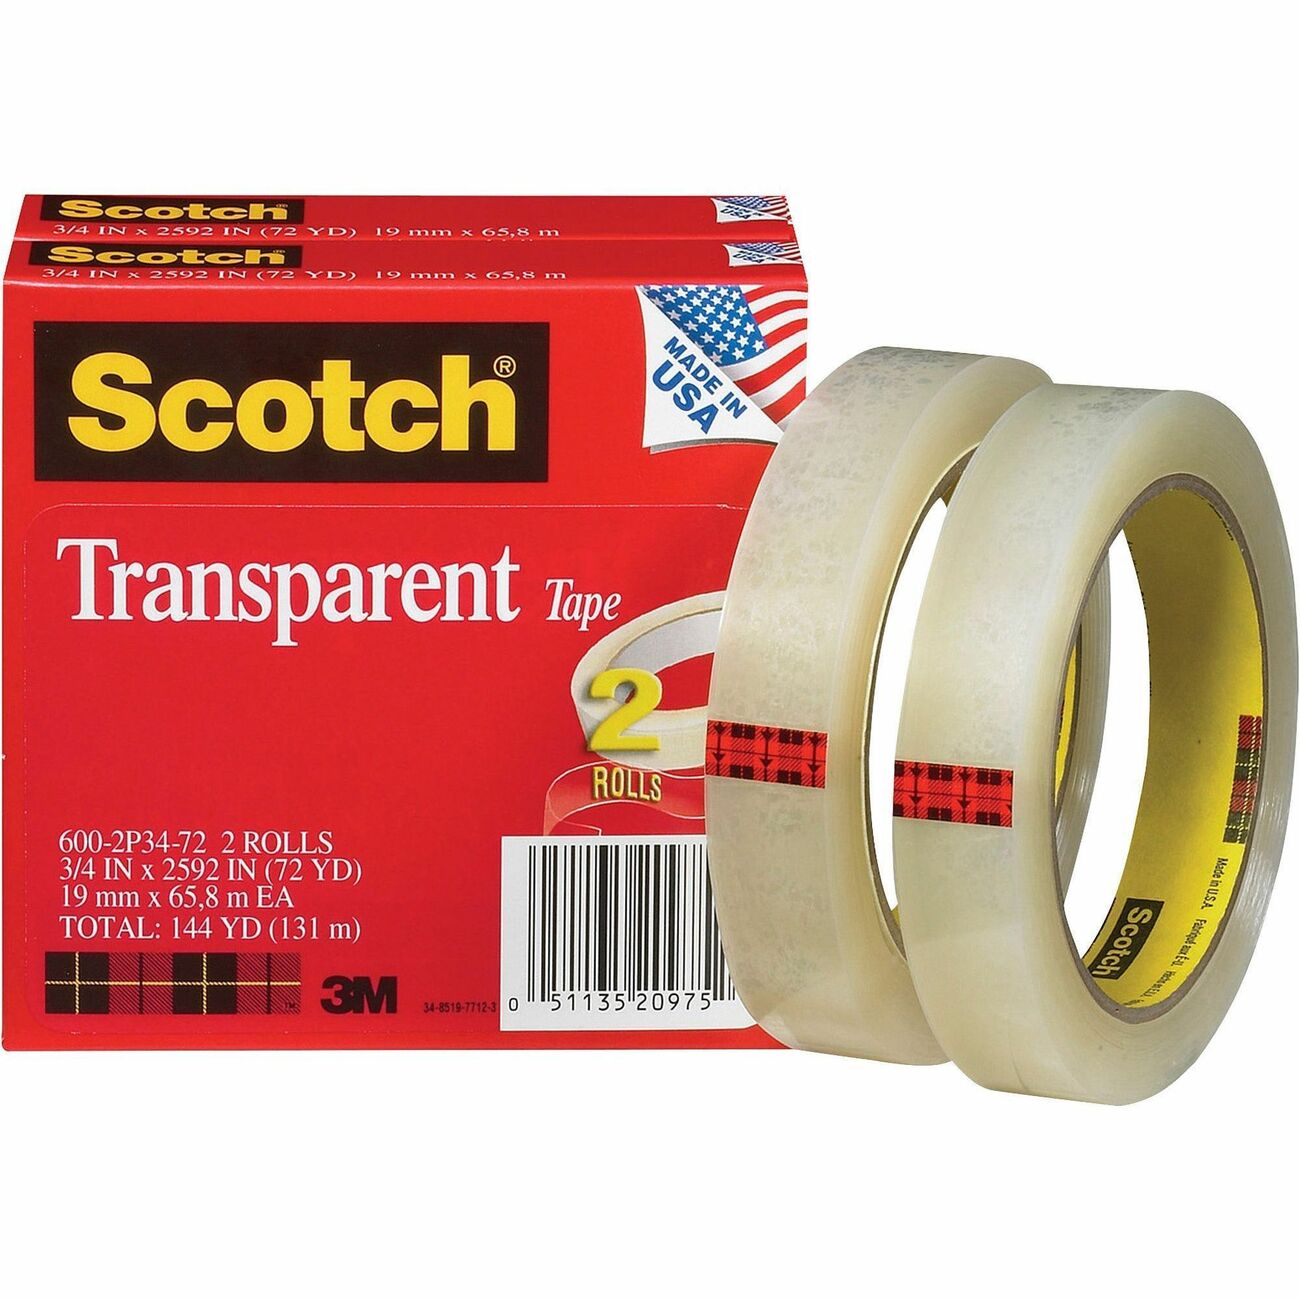 Scotch Transparent Tape 3/4